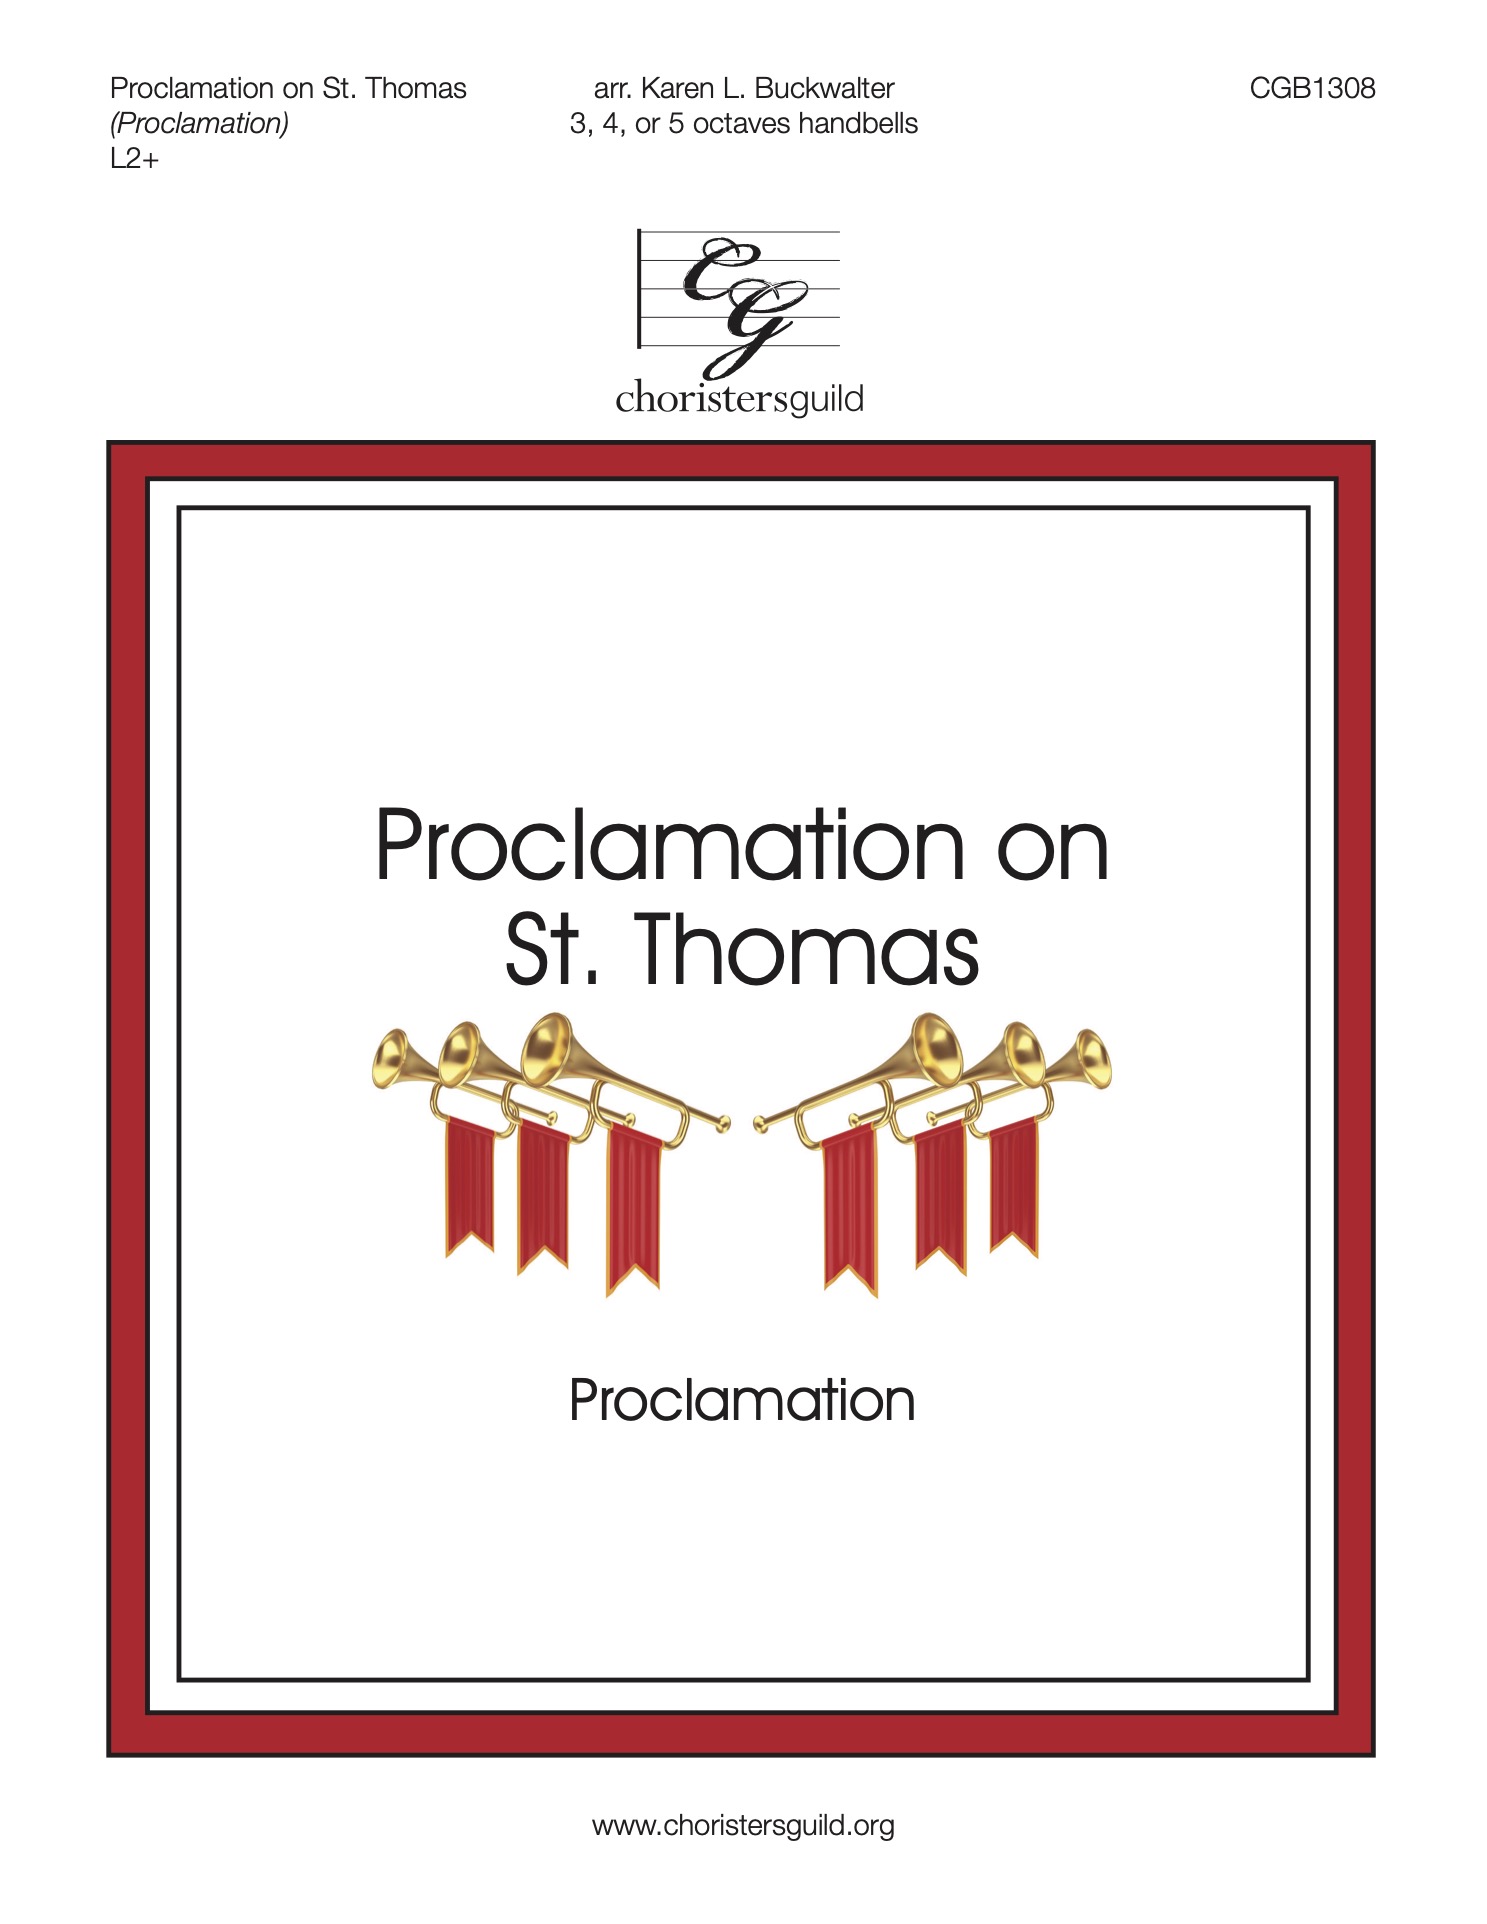 Proclamation on St. Thomas (3-5 octaves)